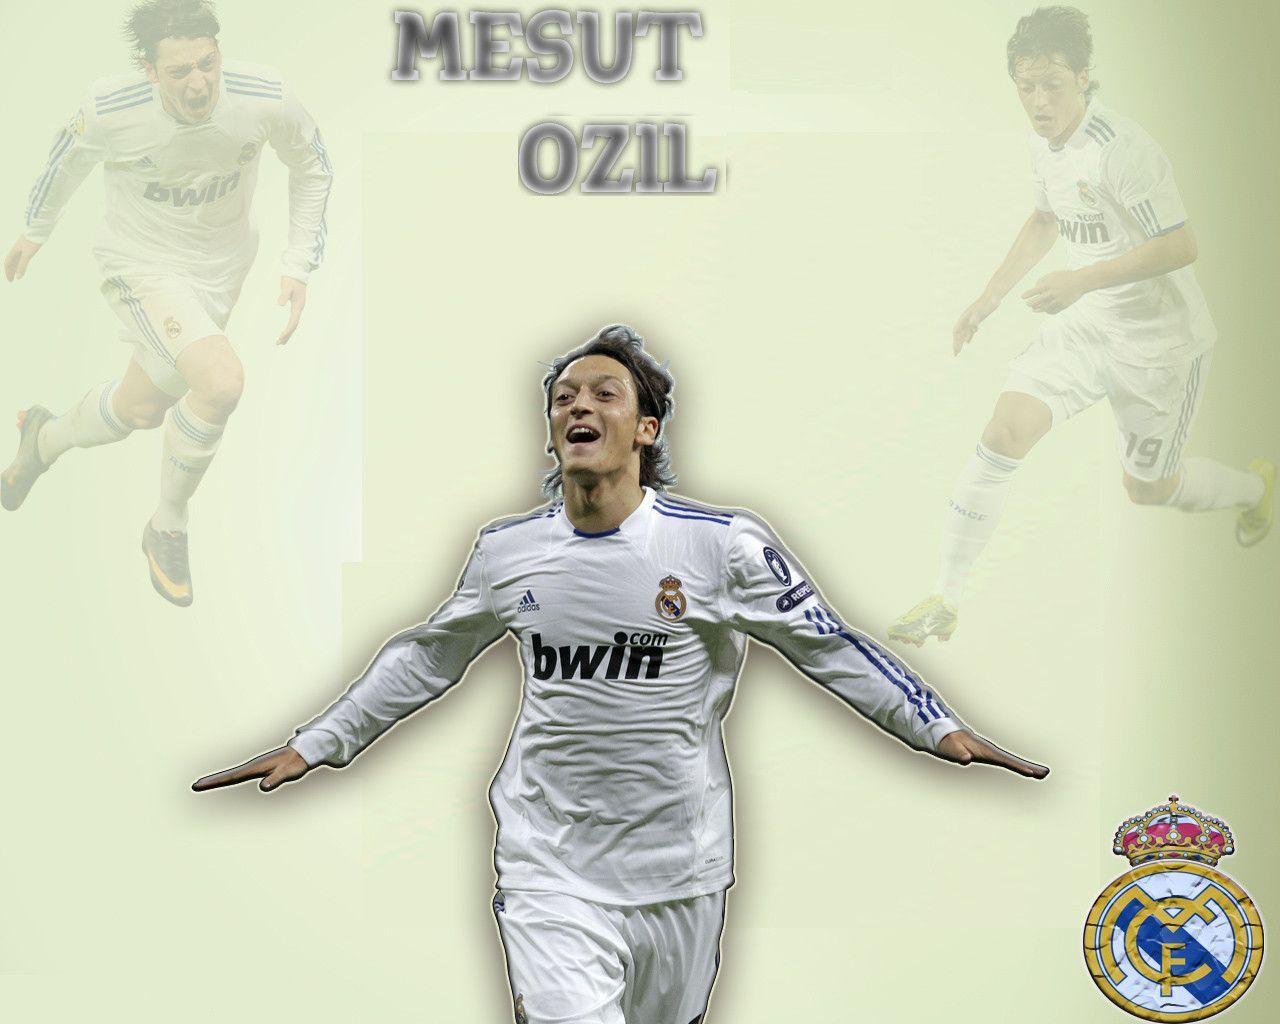 Mesut Ozil Real Madrid Özil Wallpaper